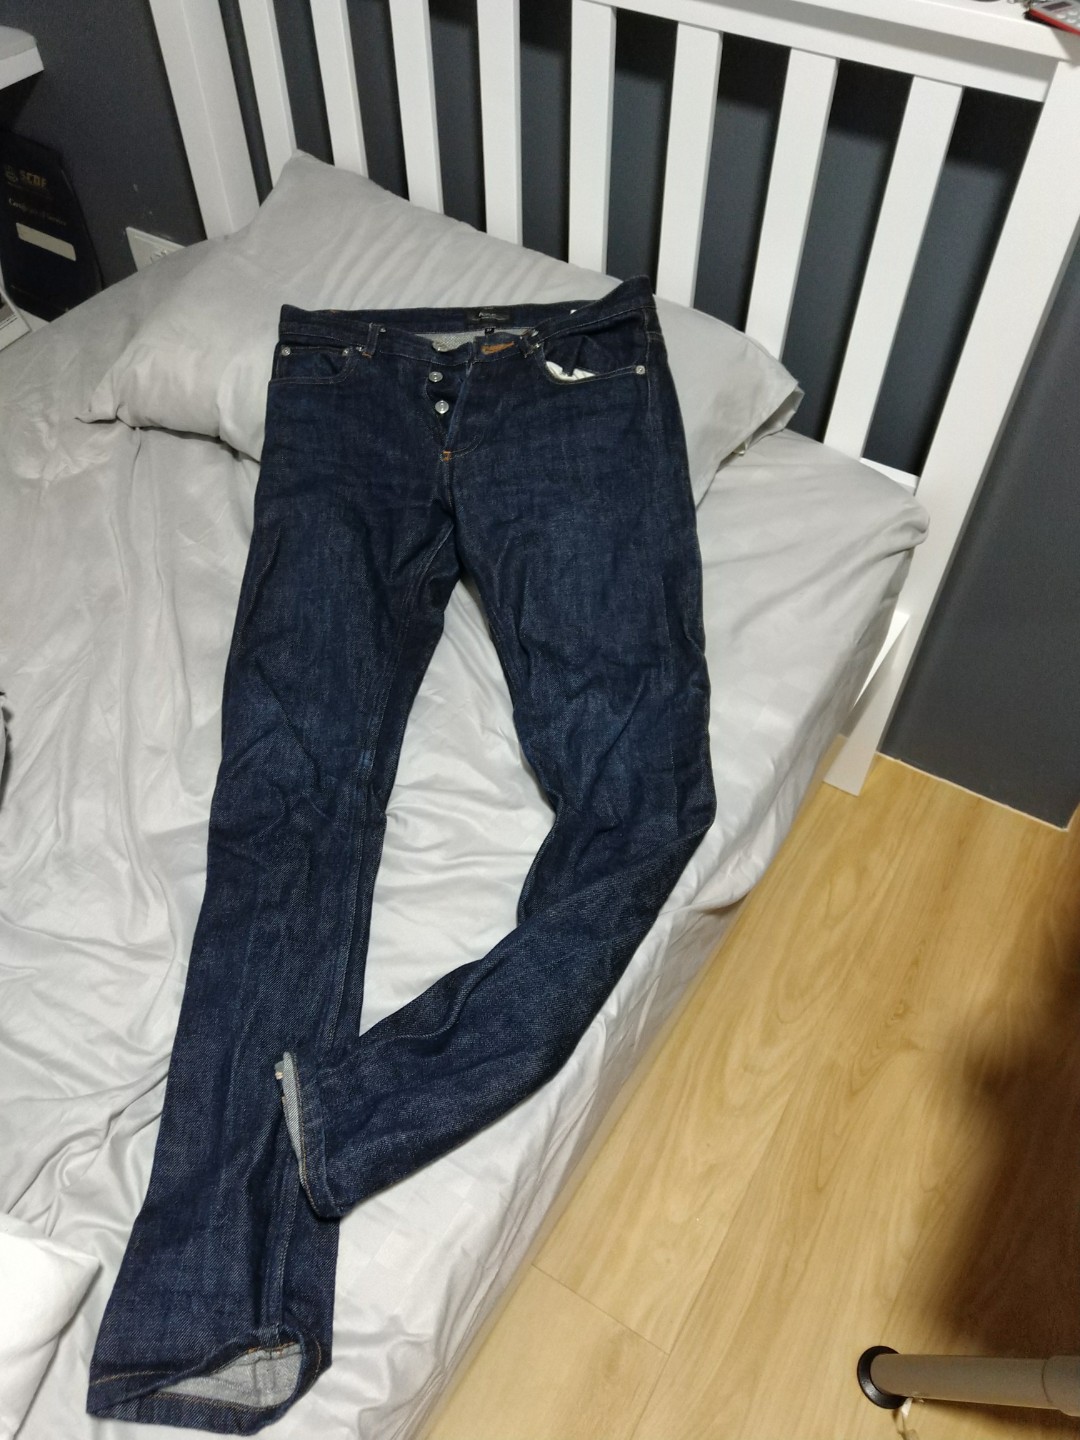 apc jeans sizing